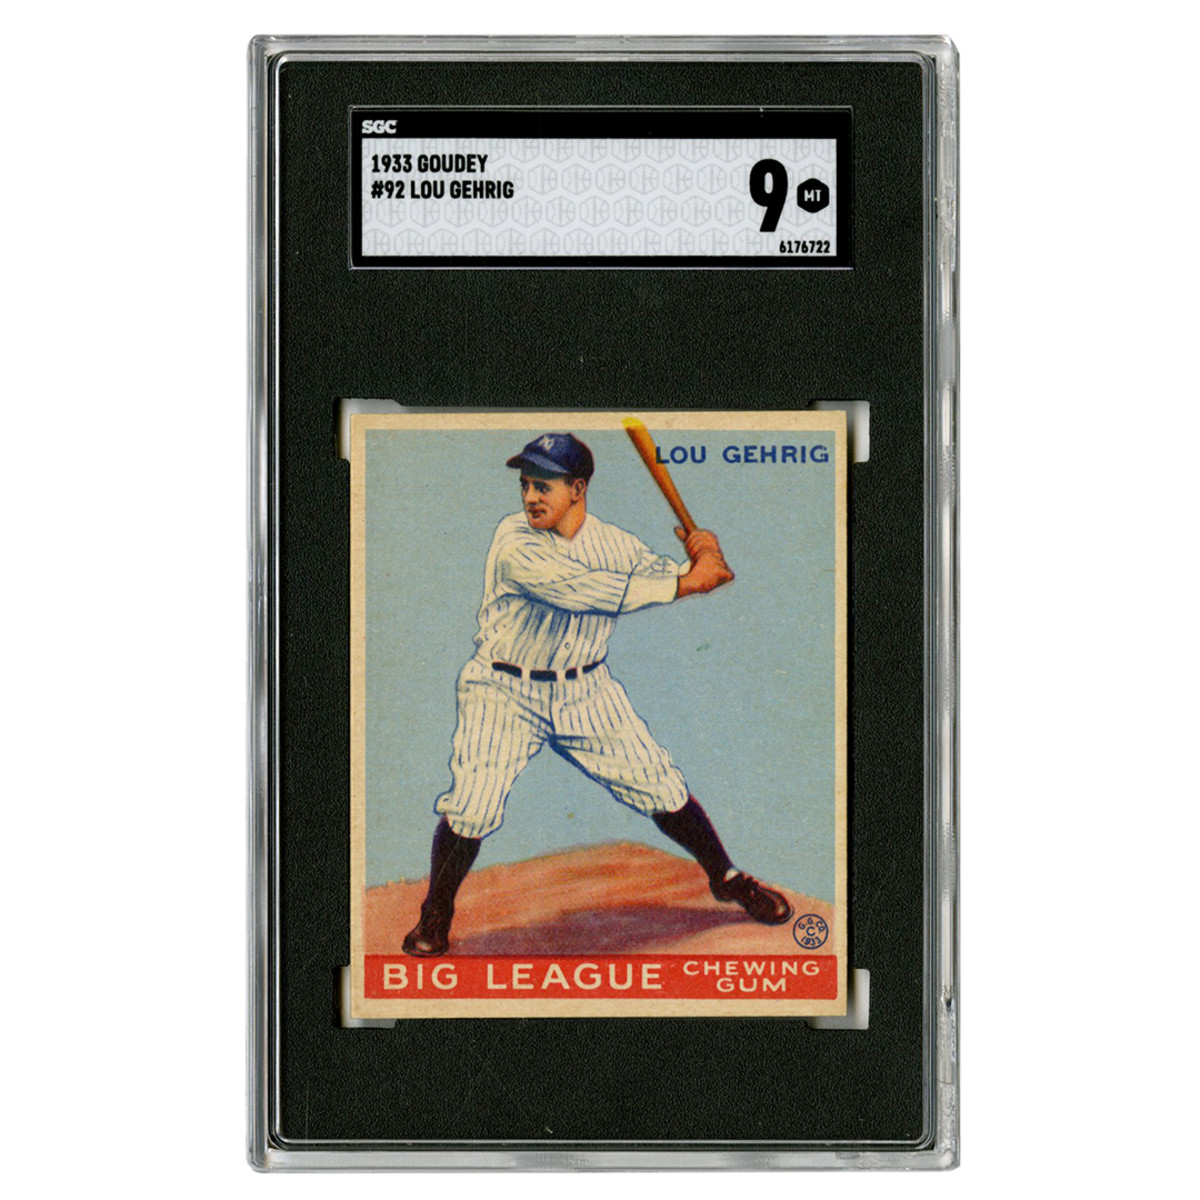 1933 Goudey Lou Gehrig card.